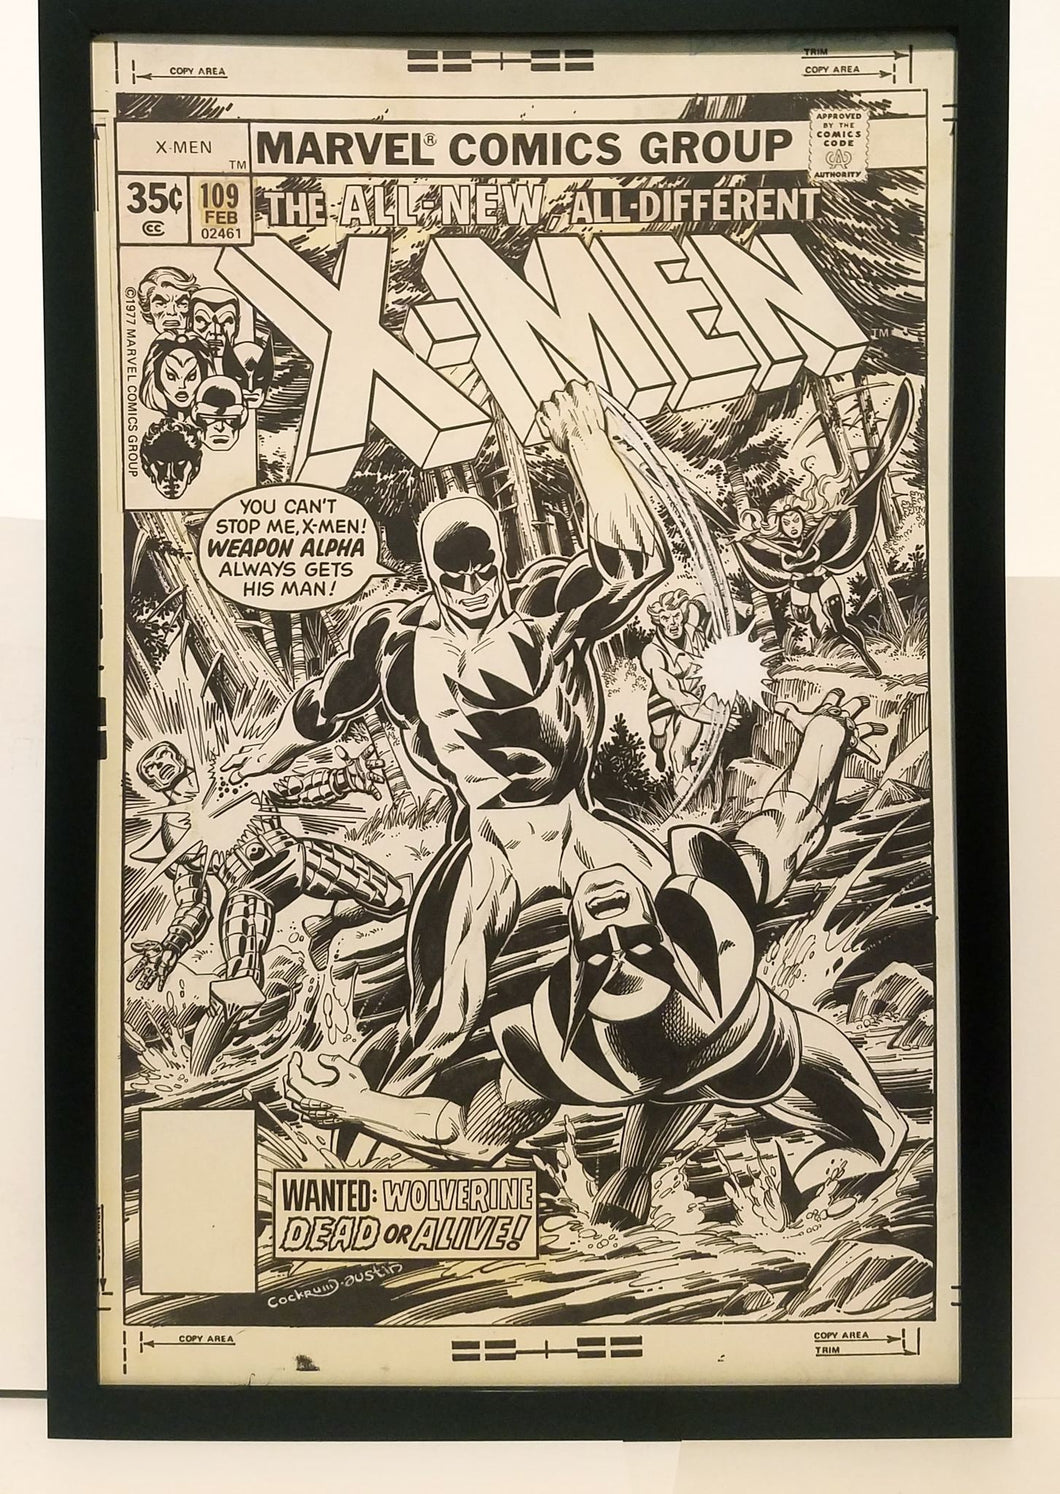 Uncanny X-Men #109 by Dave Cockrum 11x17 FRAMED Original Art Poster Marvel Comics